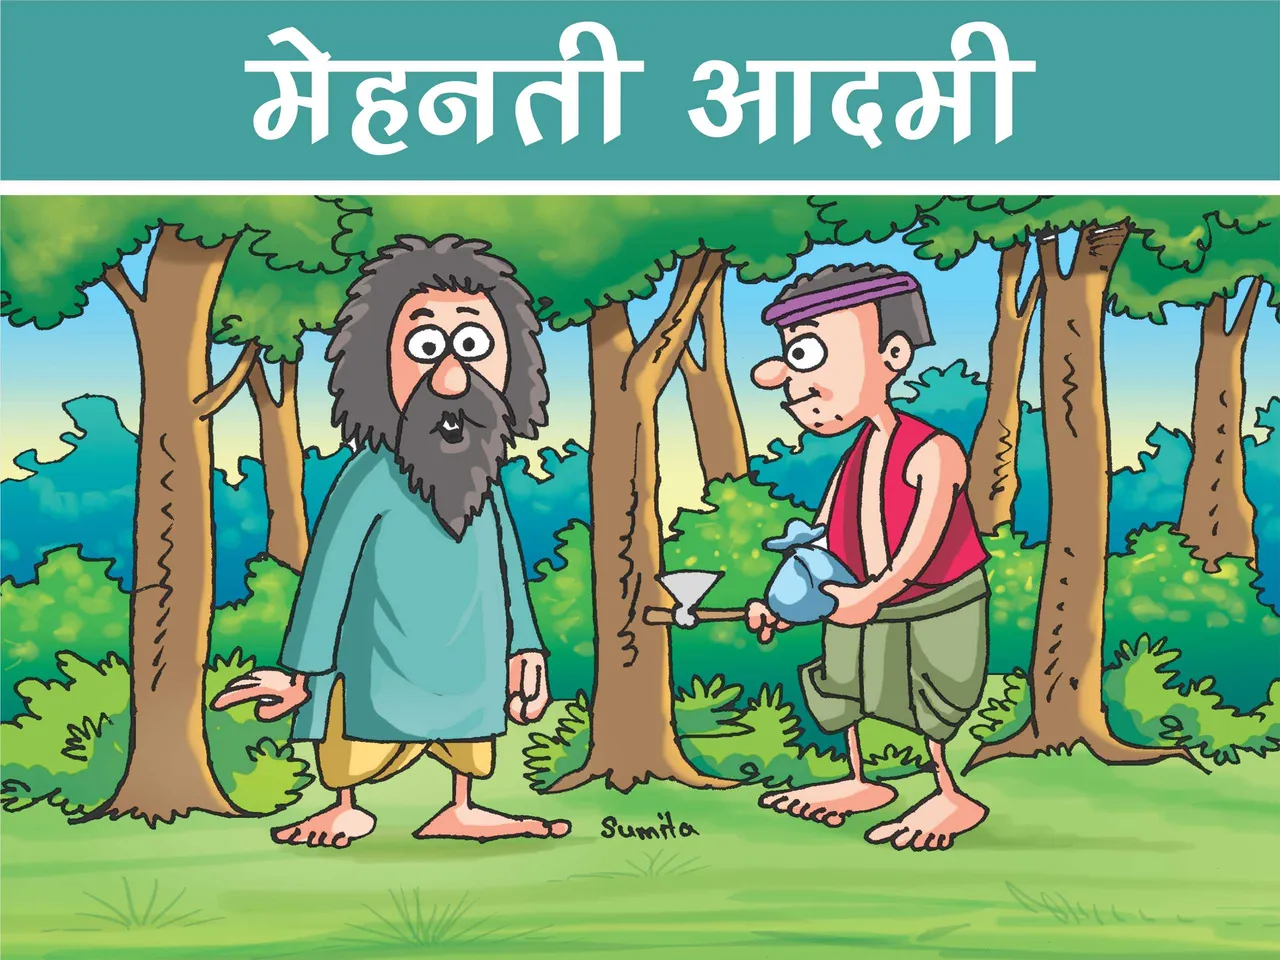 Sadhu and woodcutter cartoon image